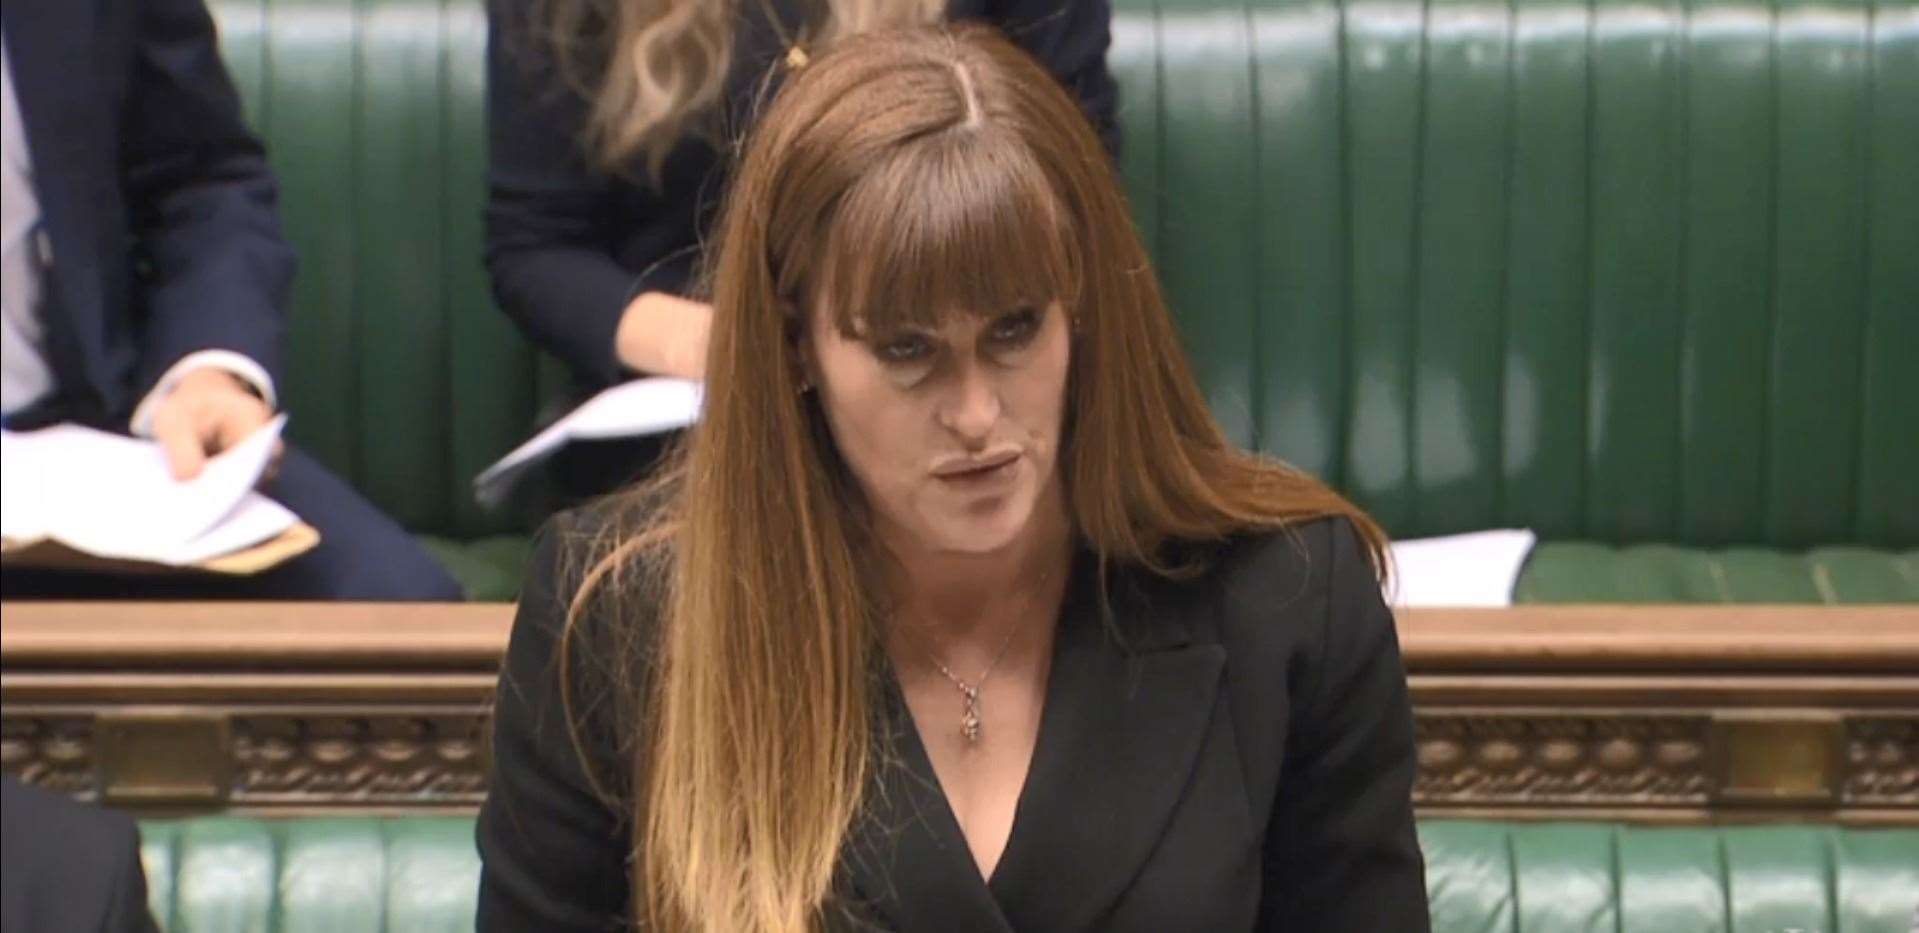 MP Kelly Tolhurst. Picture: Parliamentlive.tv